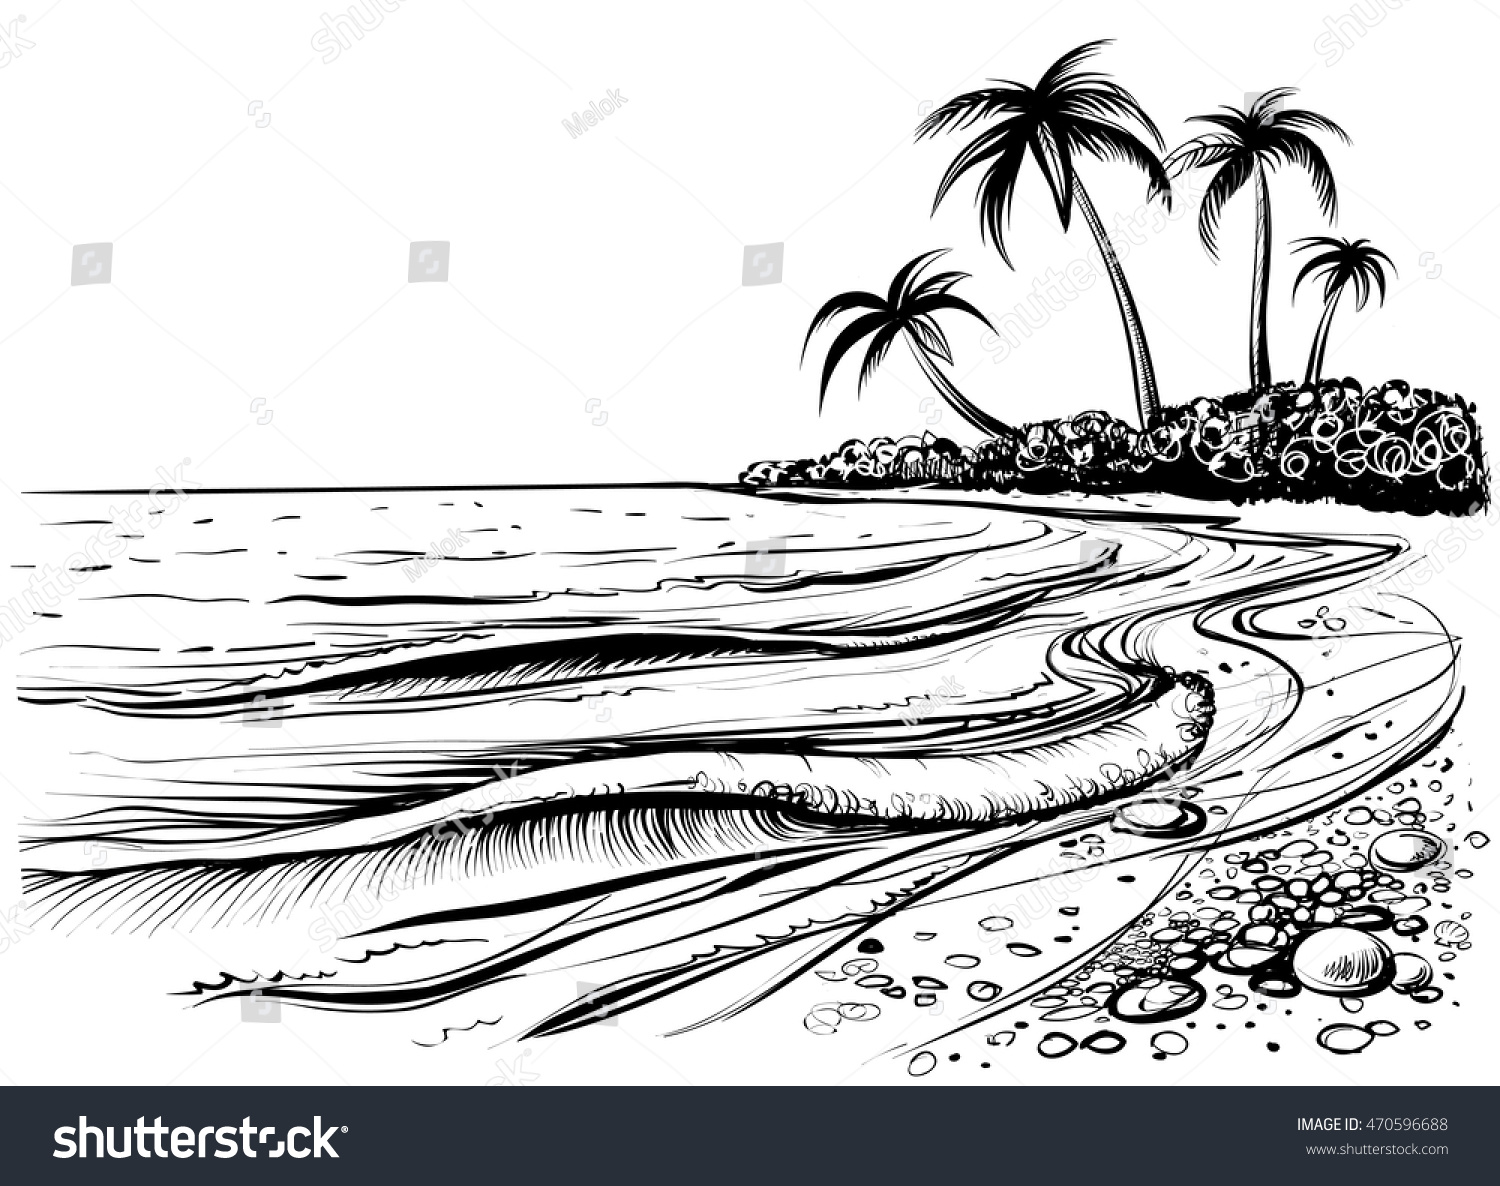 Ocean Sea Beach Waves Sketch Black Stock Vector 470596688 - Shutterstock